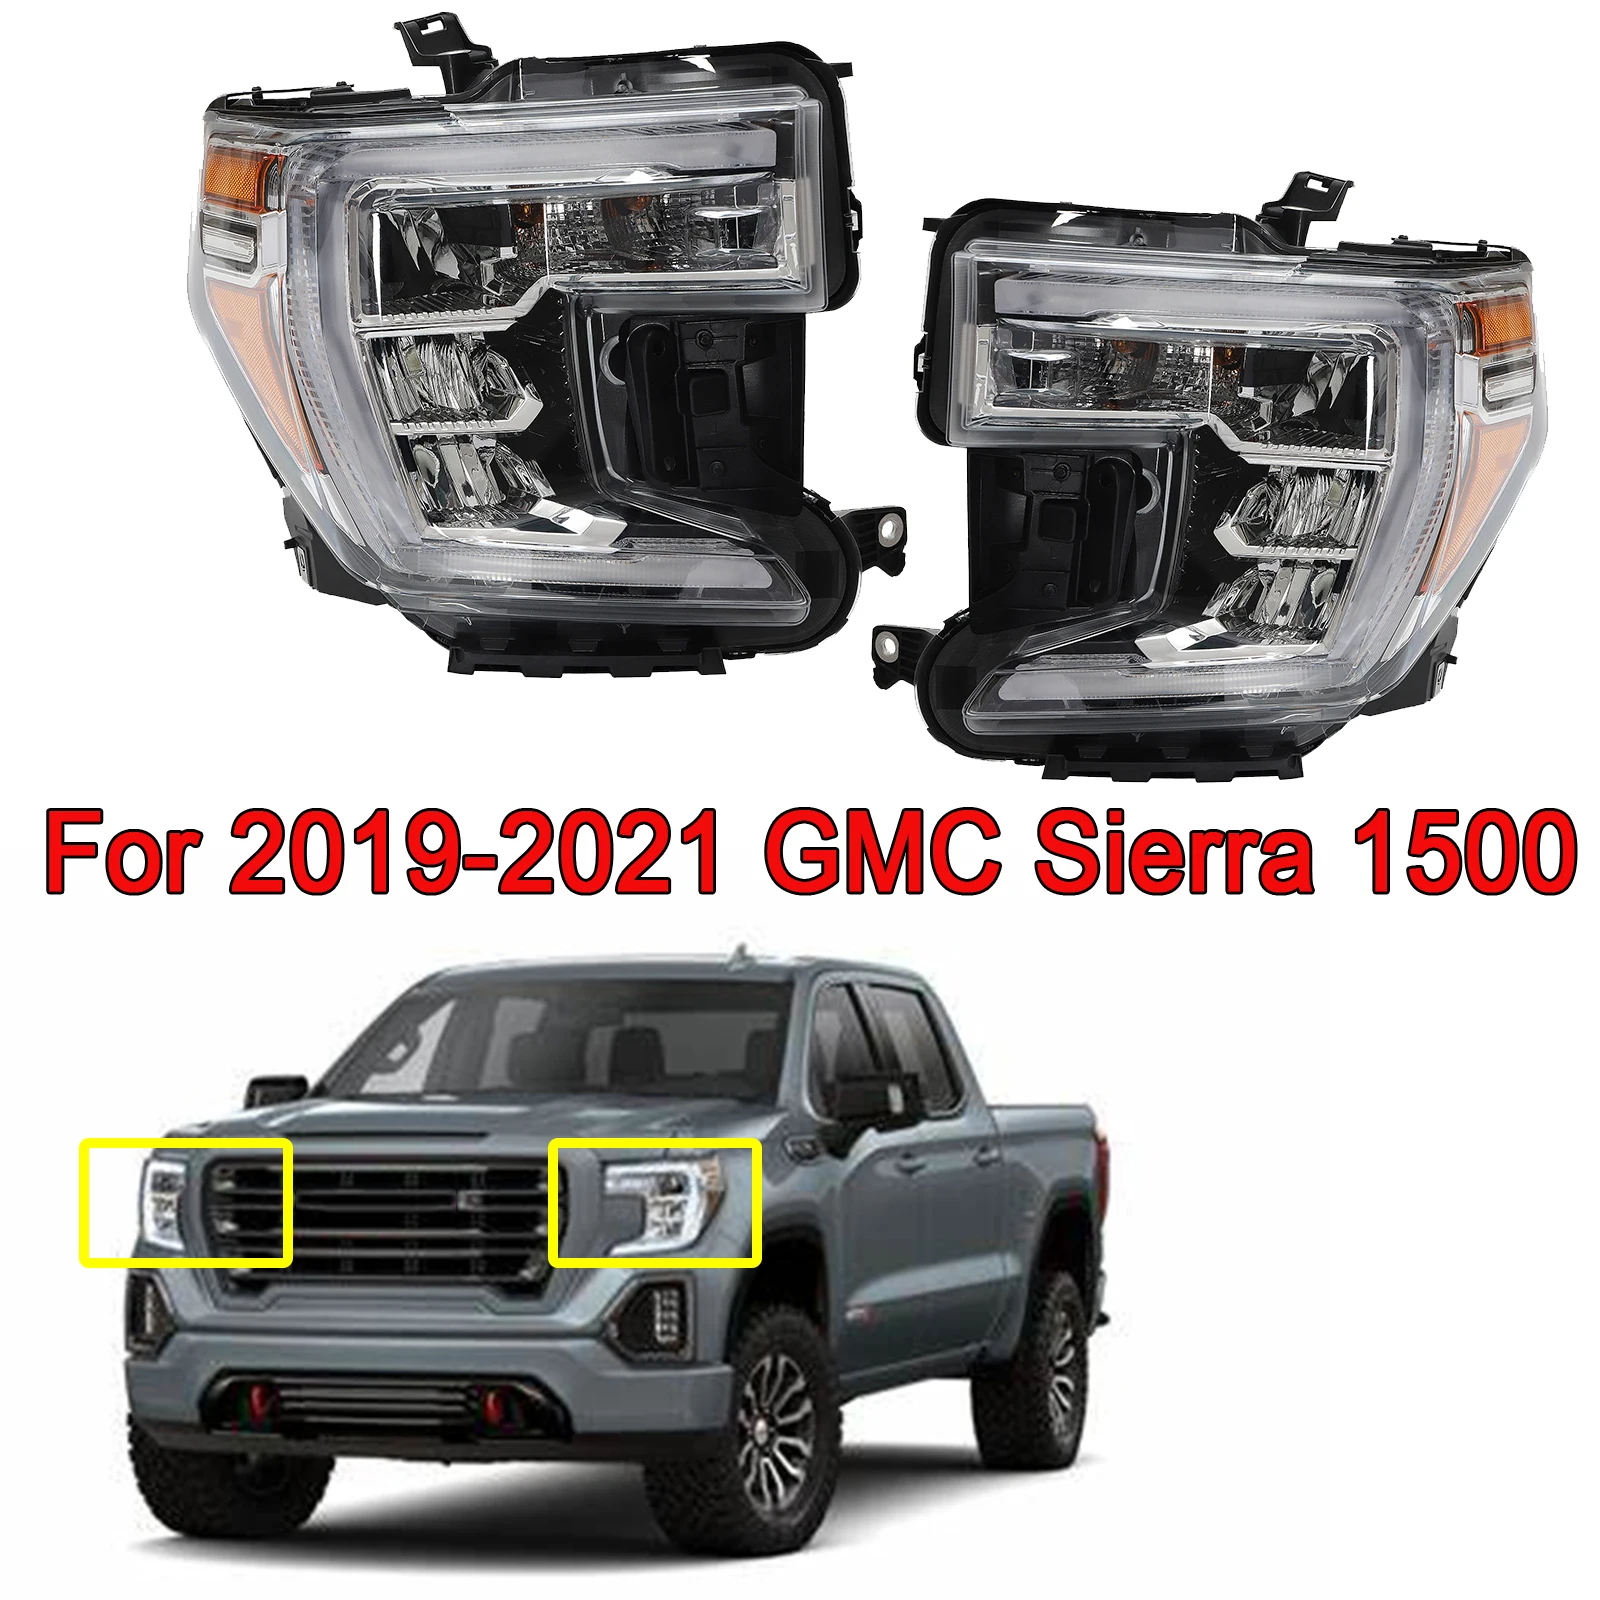 

Front Headlight Headlamp Assembly For GMC Sierra 1500 2019-2021 Halogen Lamp Driver Left Side/ Passenger Right Side/ Pair